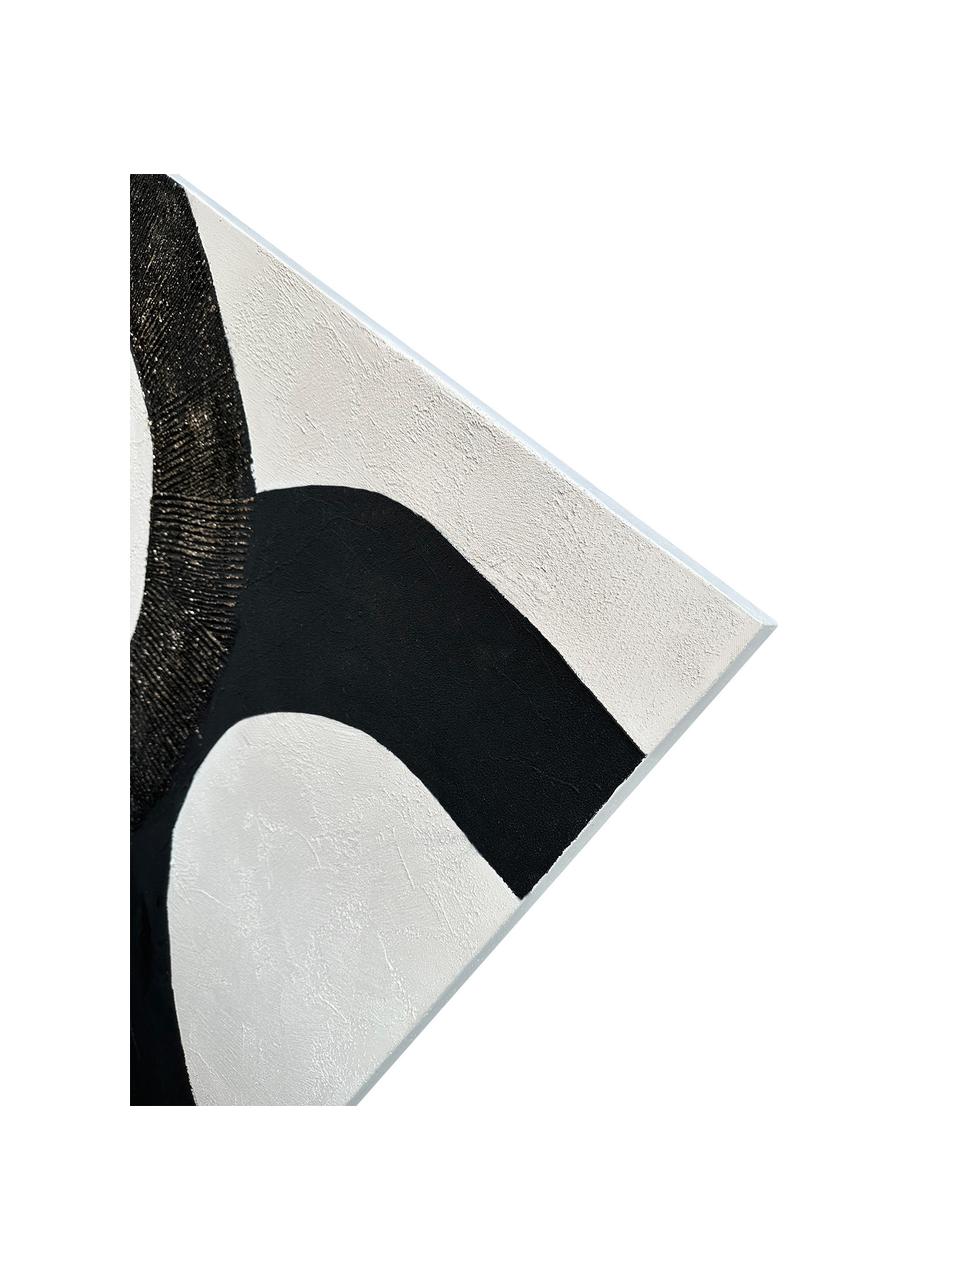 Tela dipinta a mano Black Circles, Nero, beige chiaro, Larg. 80 x Alt. 80 cm